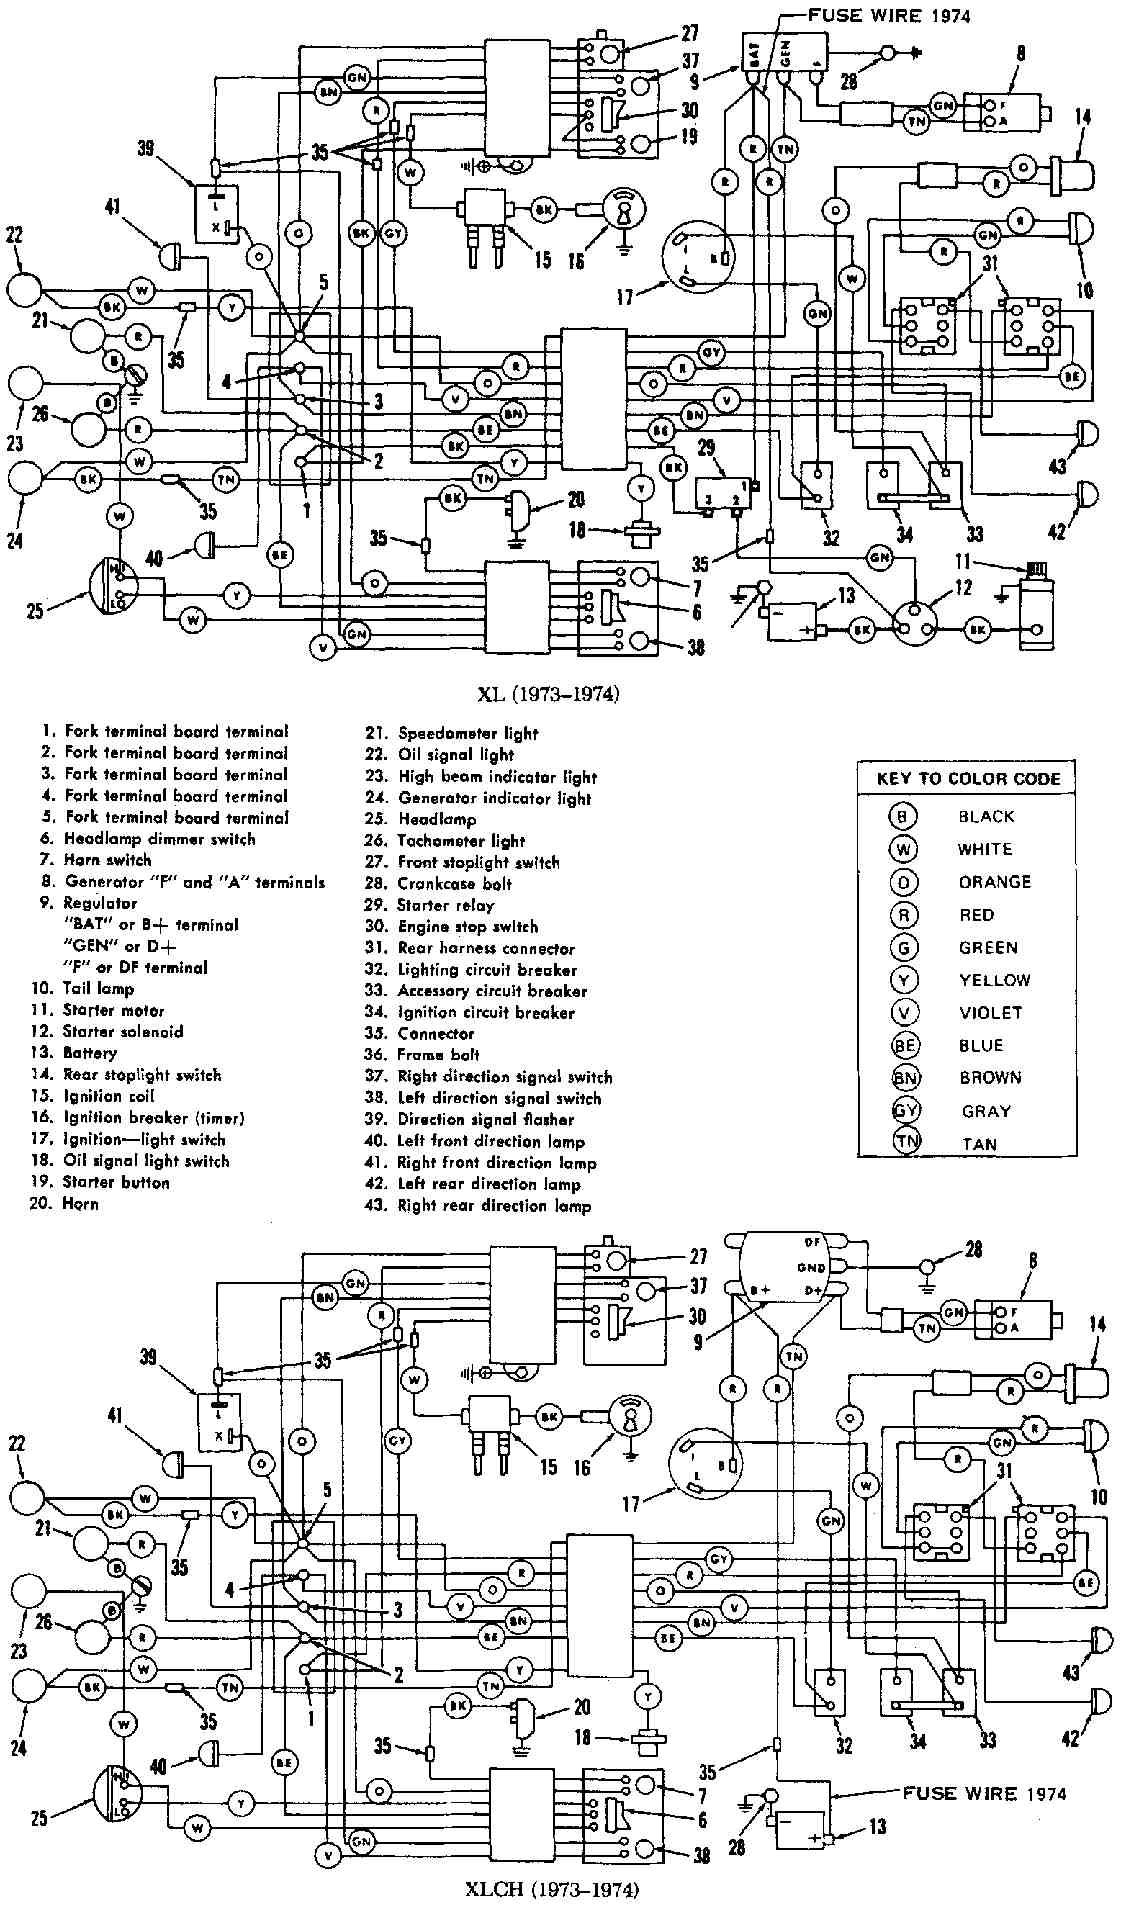 HARLEY DAVIDSON - Motorcycles Manual Pdf, Wiring Diagram & Fault Codes  Harley Davidson Electrical Wiring Diagram    MOTORCYCLE Manuals PDF & Wiring Diagrams